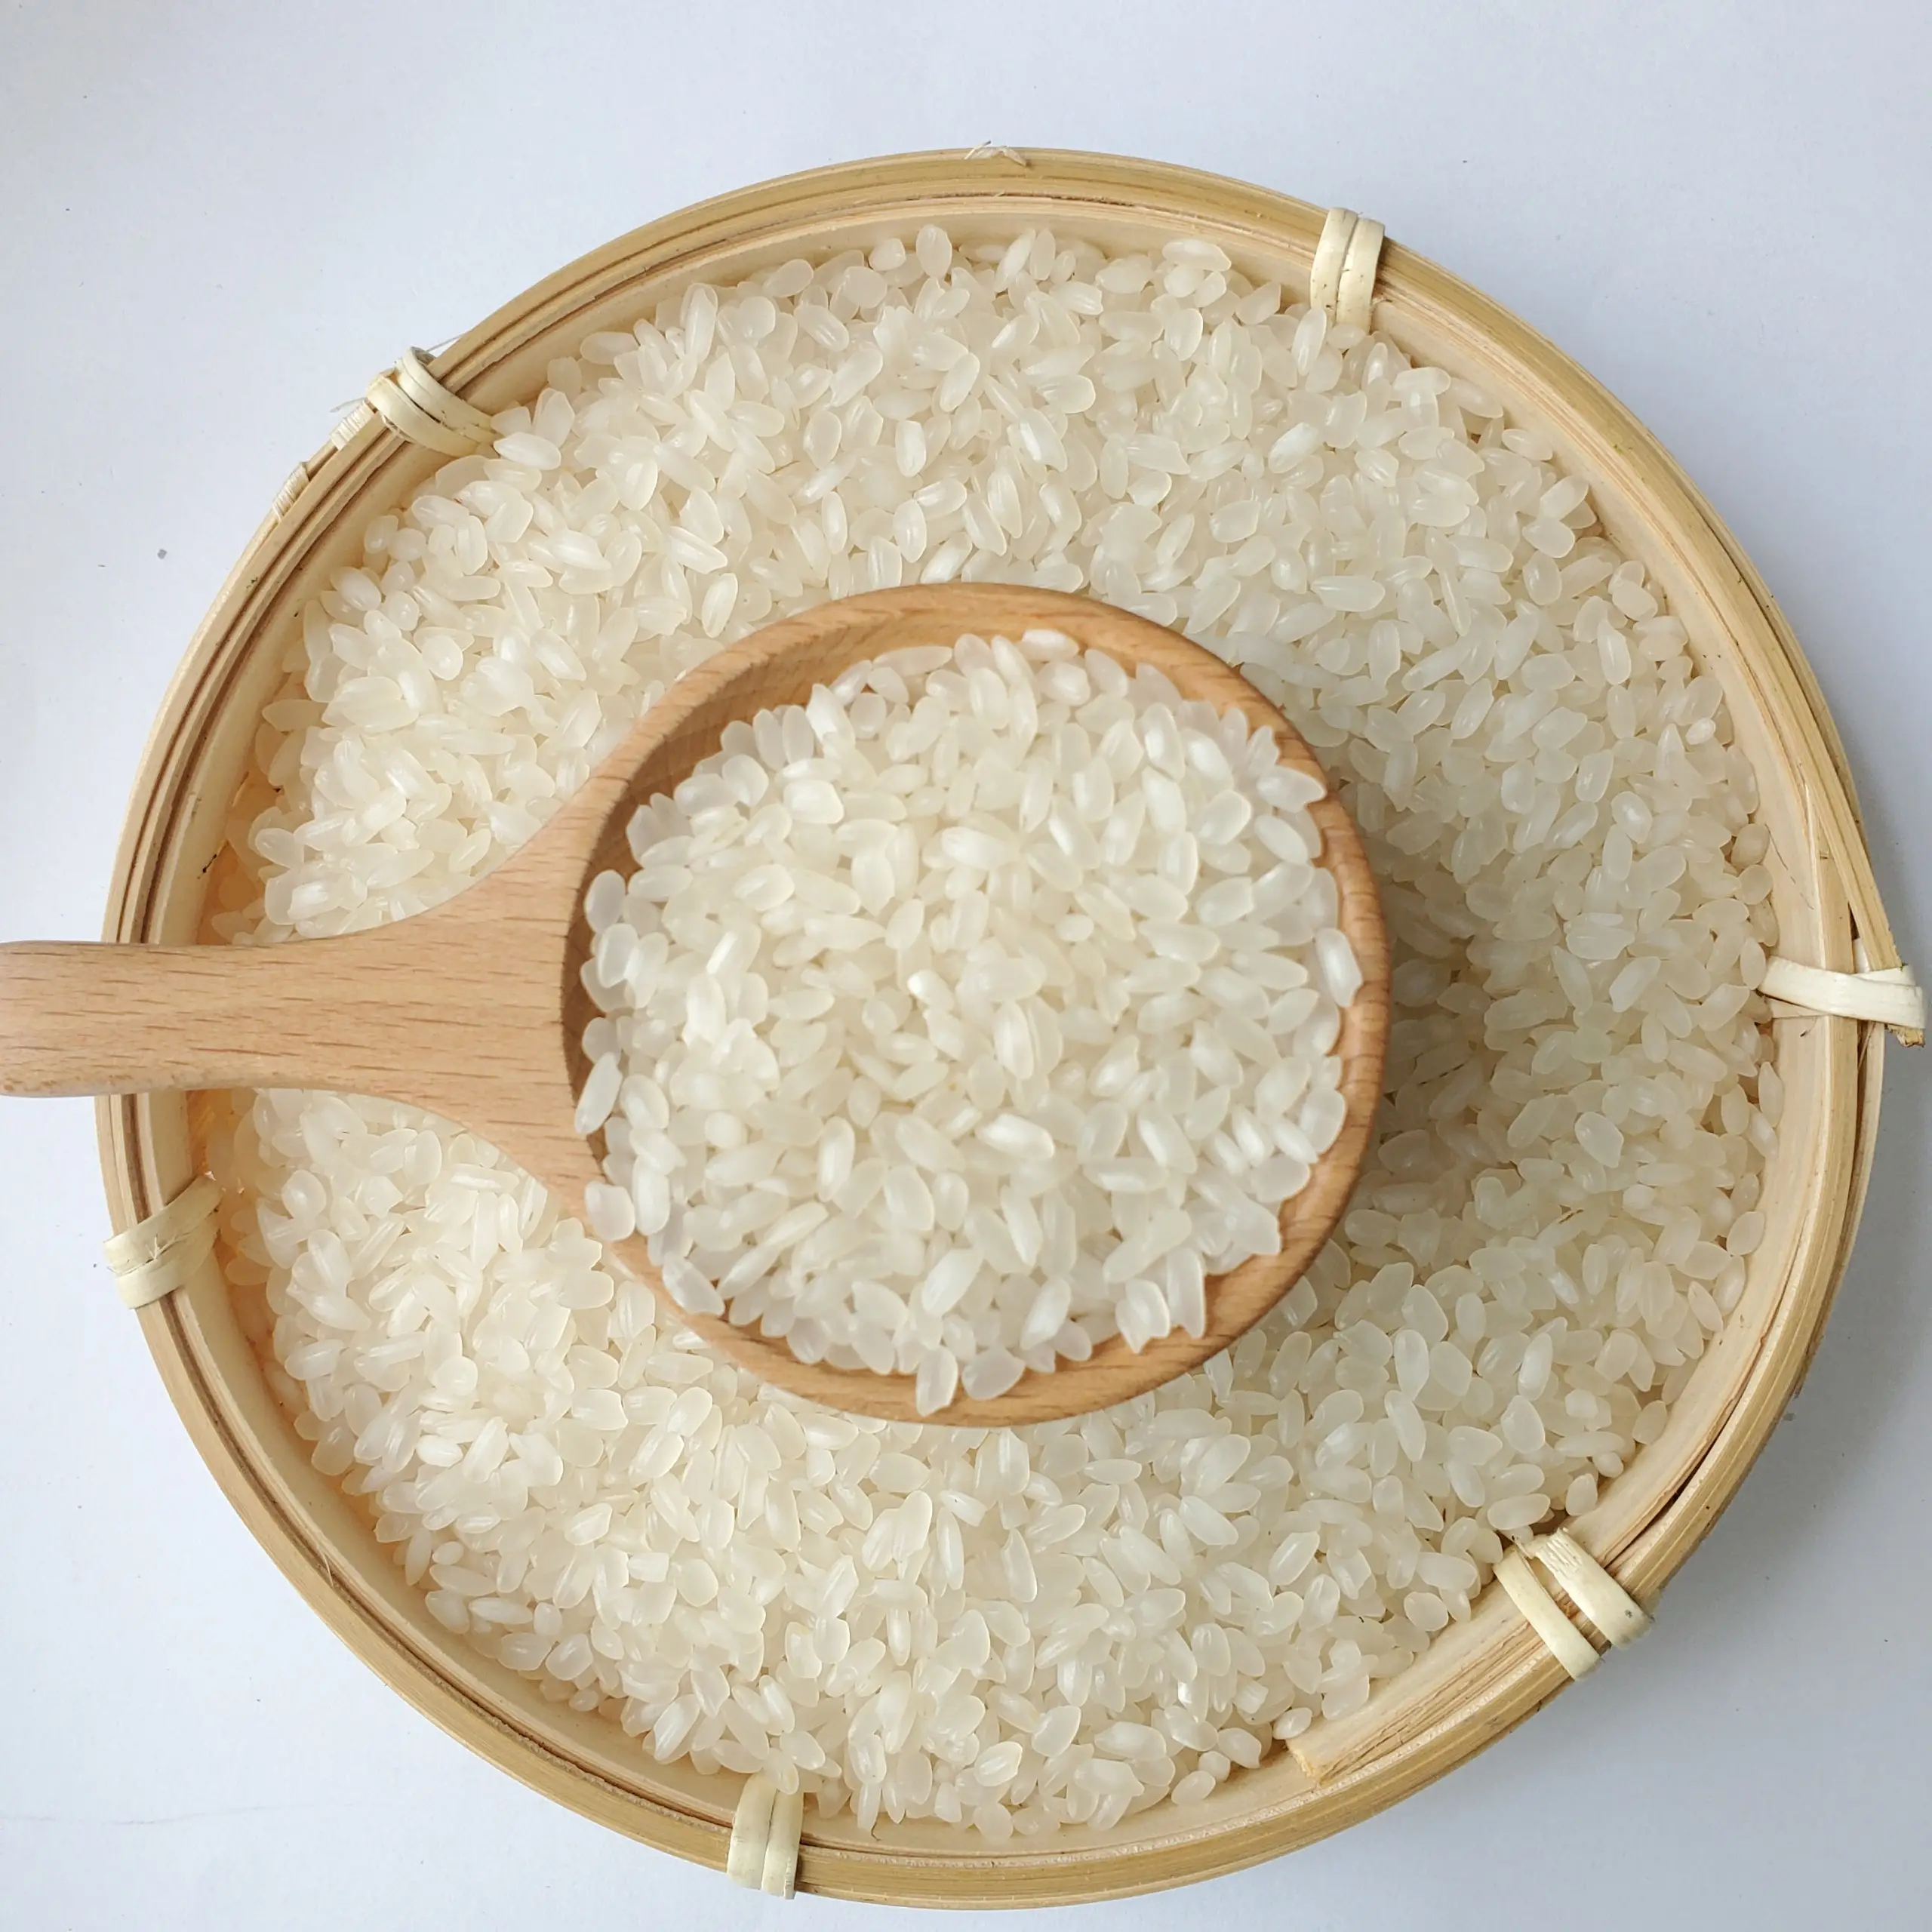 Sıcak satış orta tahıl CALROSE pirinç 5% kırık vietnam'da yetiştirilen-WHATSAPP + 84 358211696 MS. IRIS